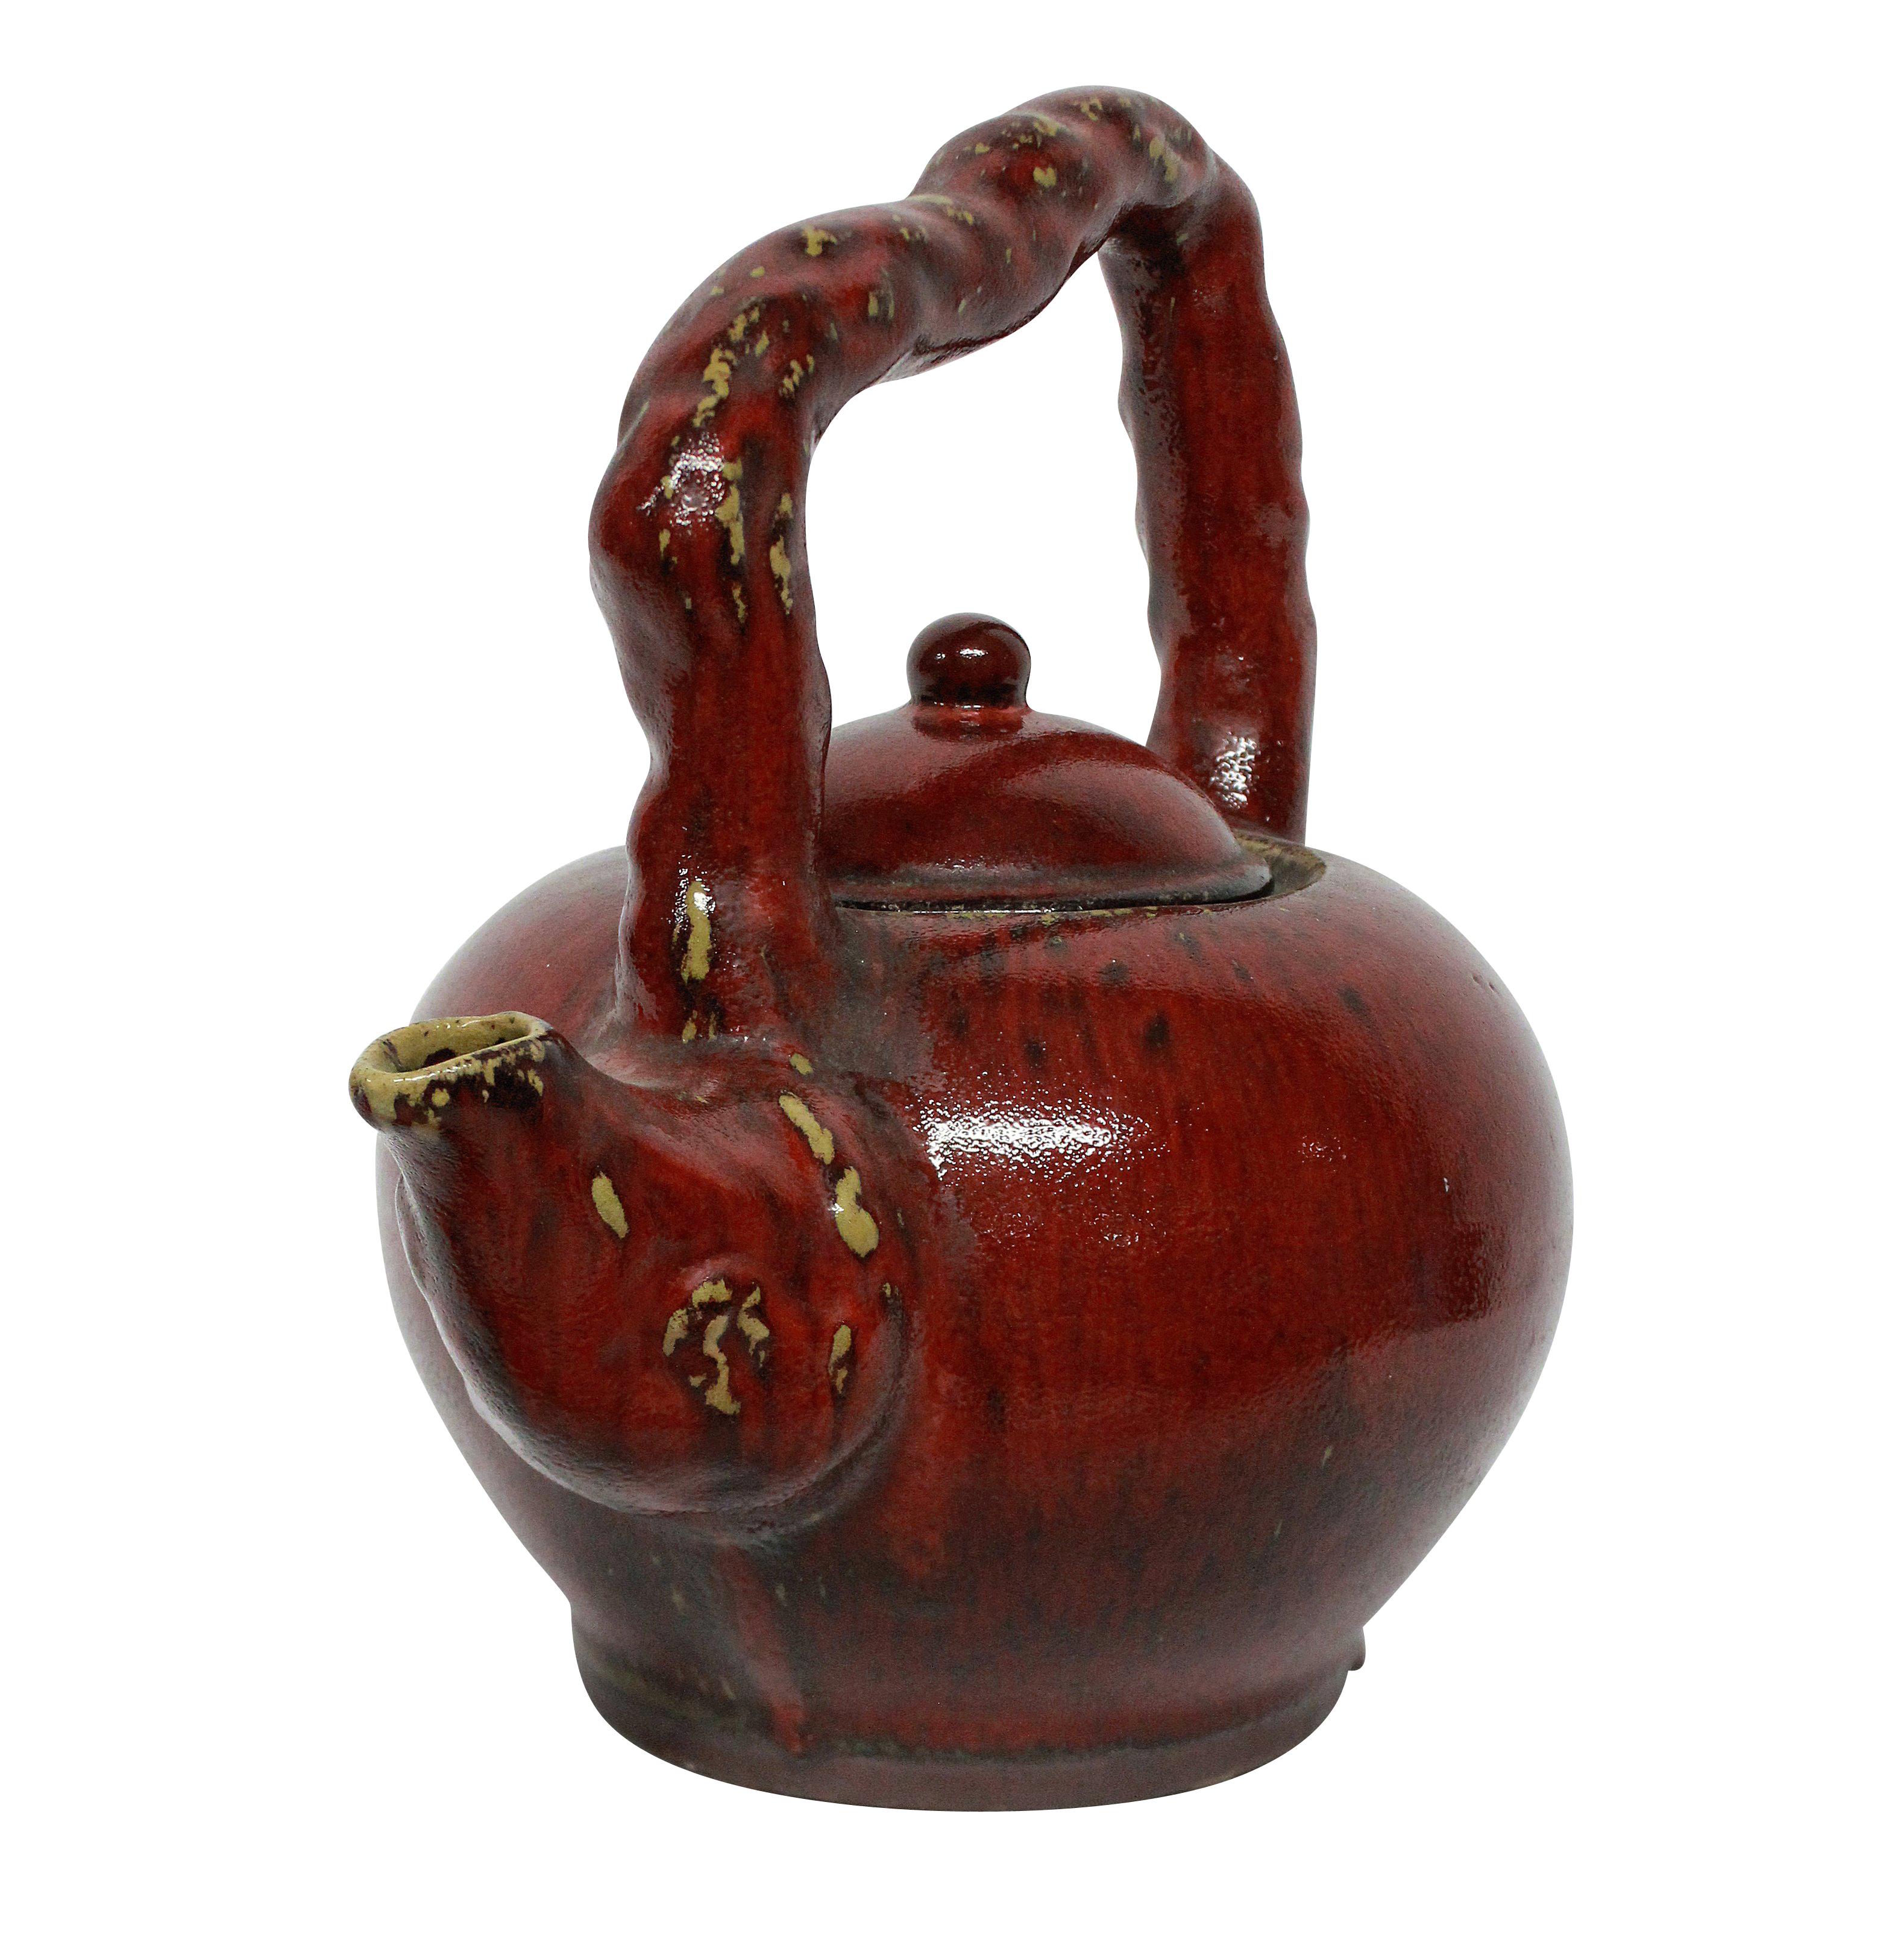 A large ornamental Japanese ceramic teapot with a sangue de boeuf glaze.